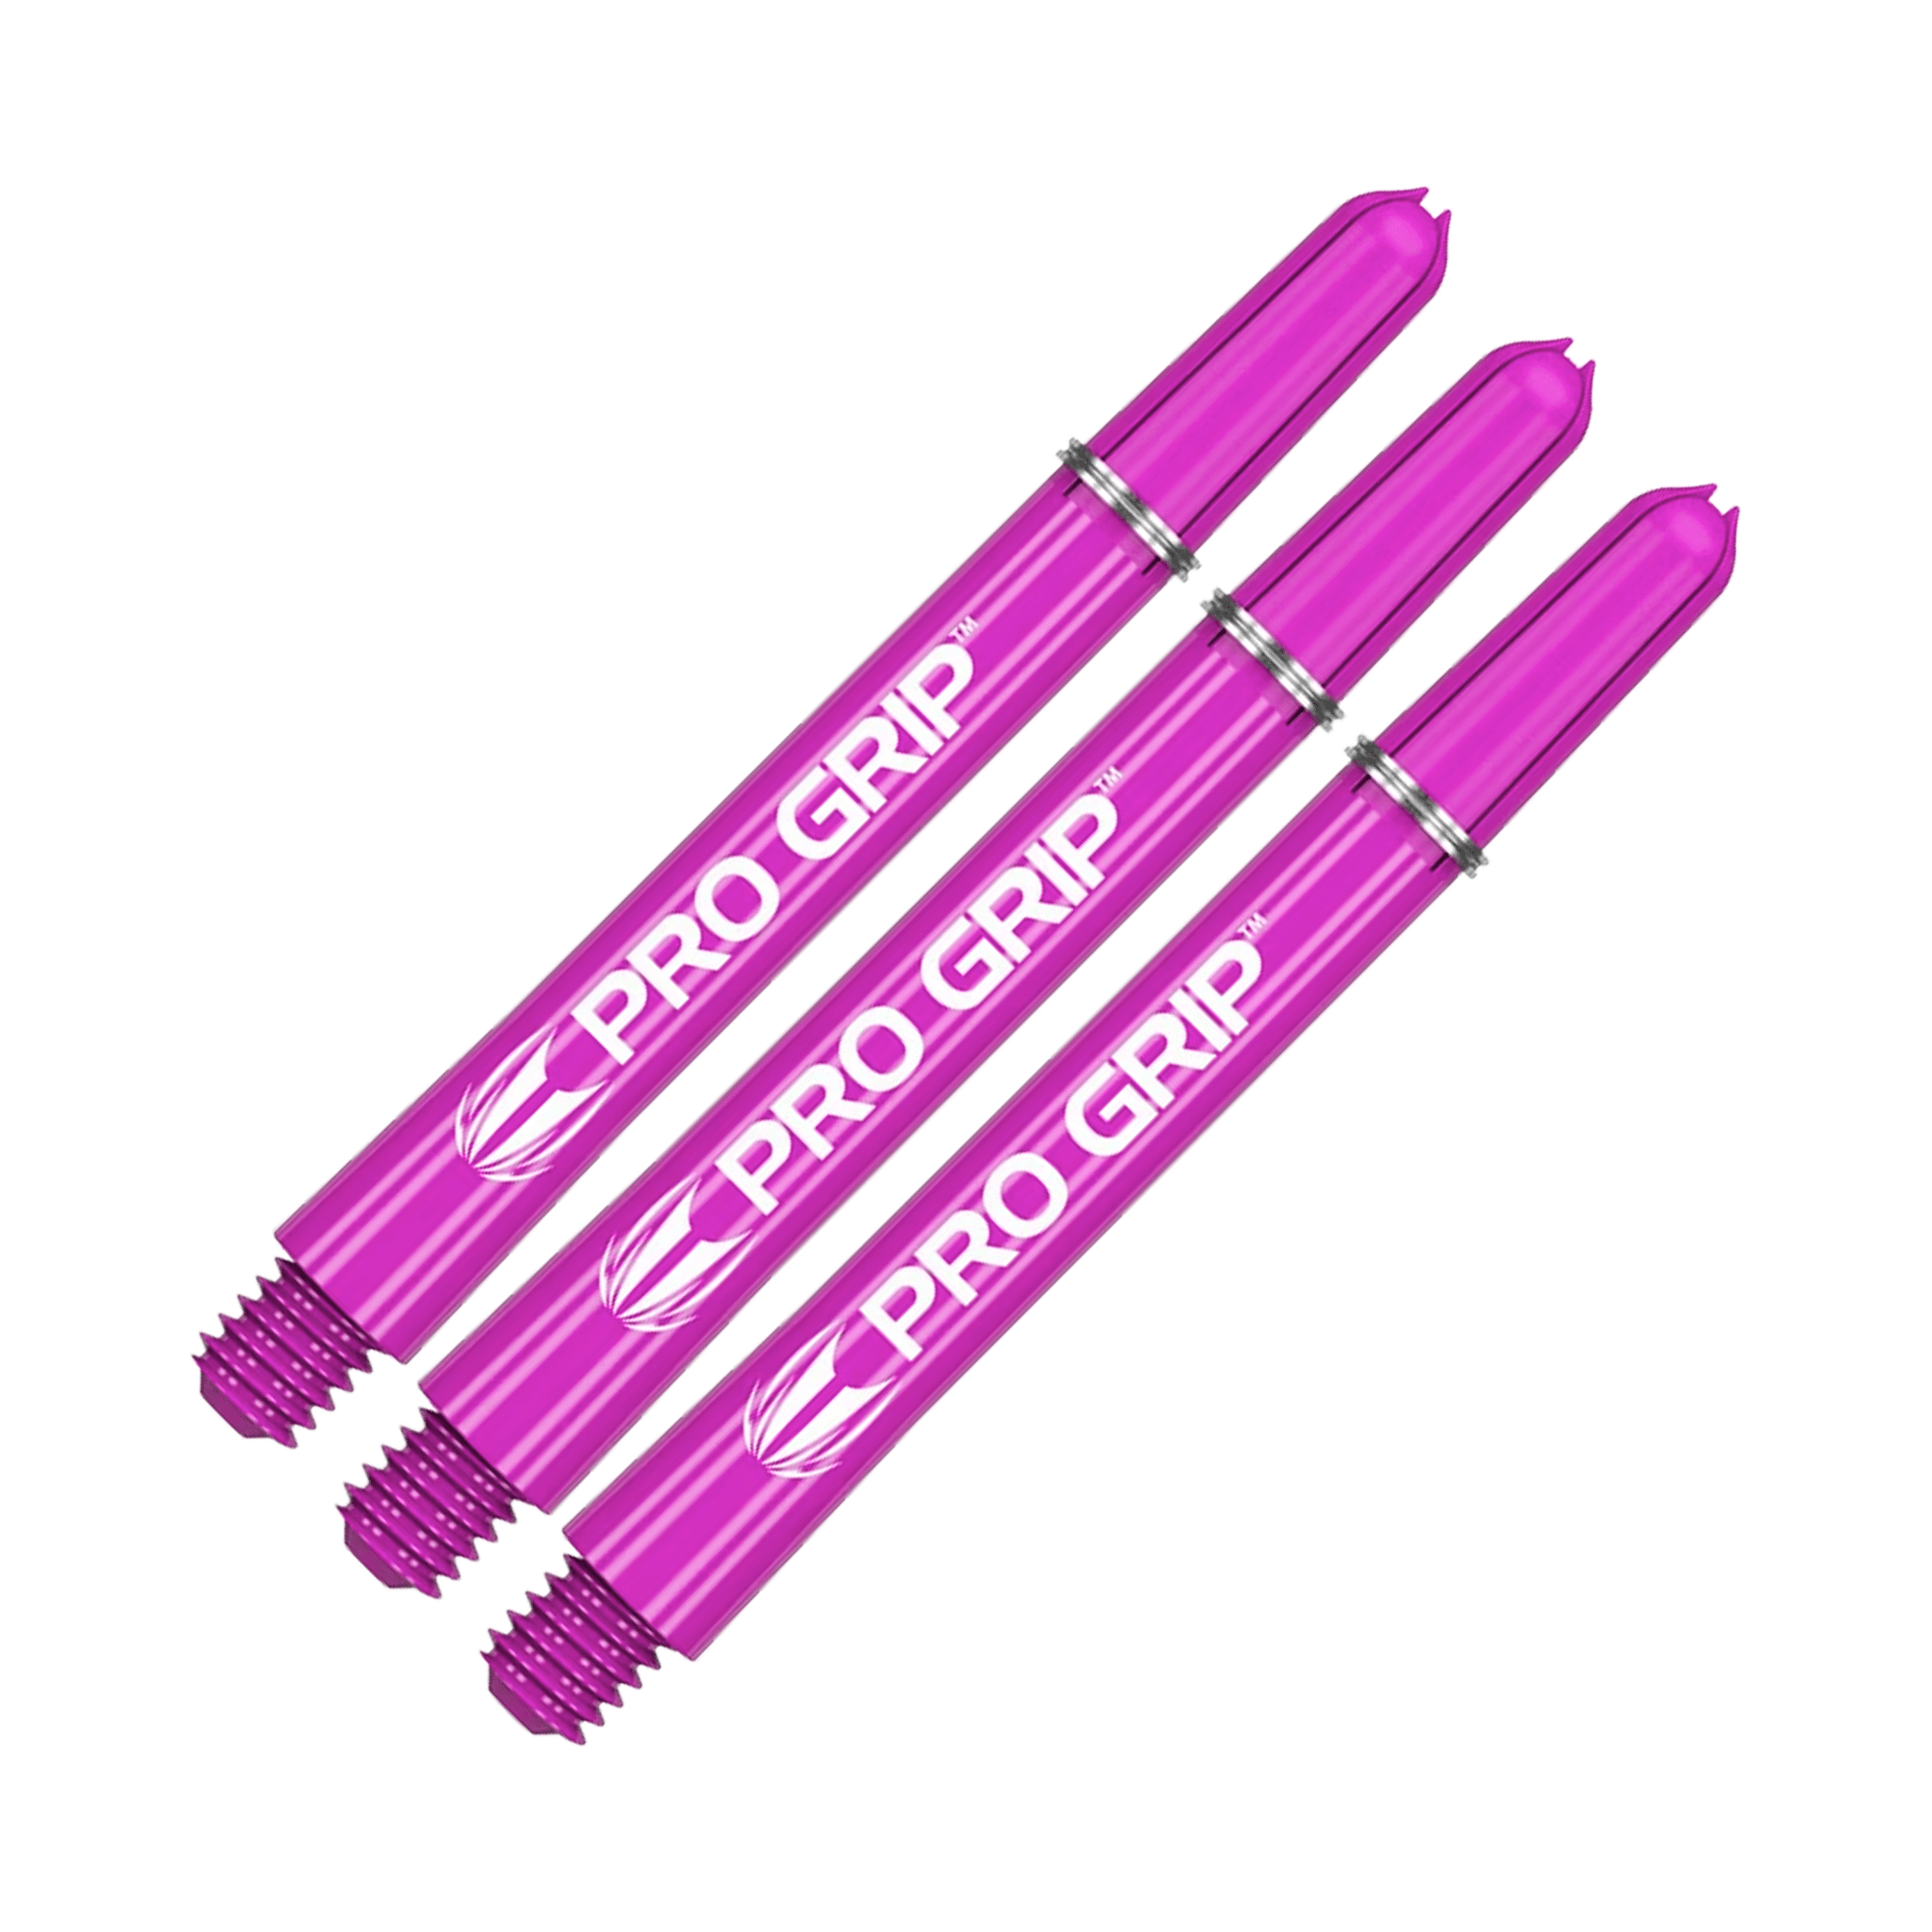 Target Pro Grip Multi Pack - Nylon Dart Shafts (3 Sets) Purple / Medium (48mm) Shafts